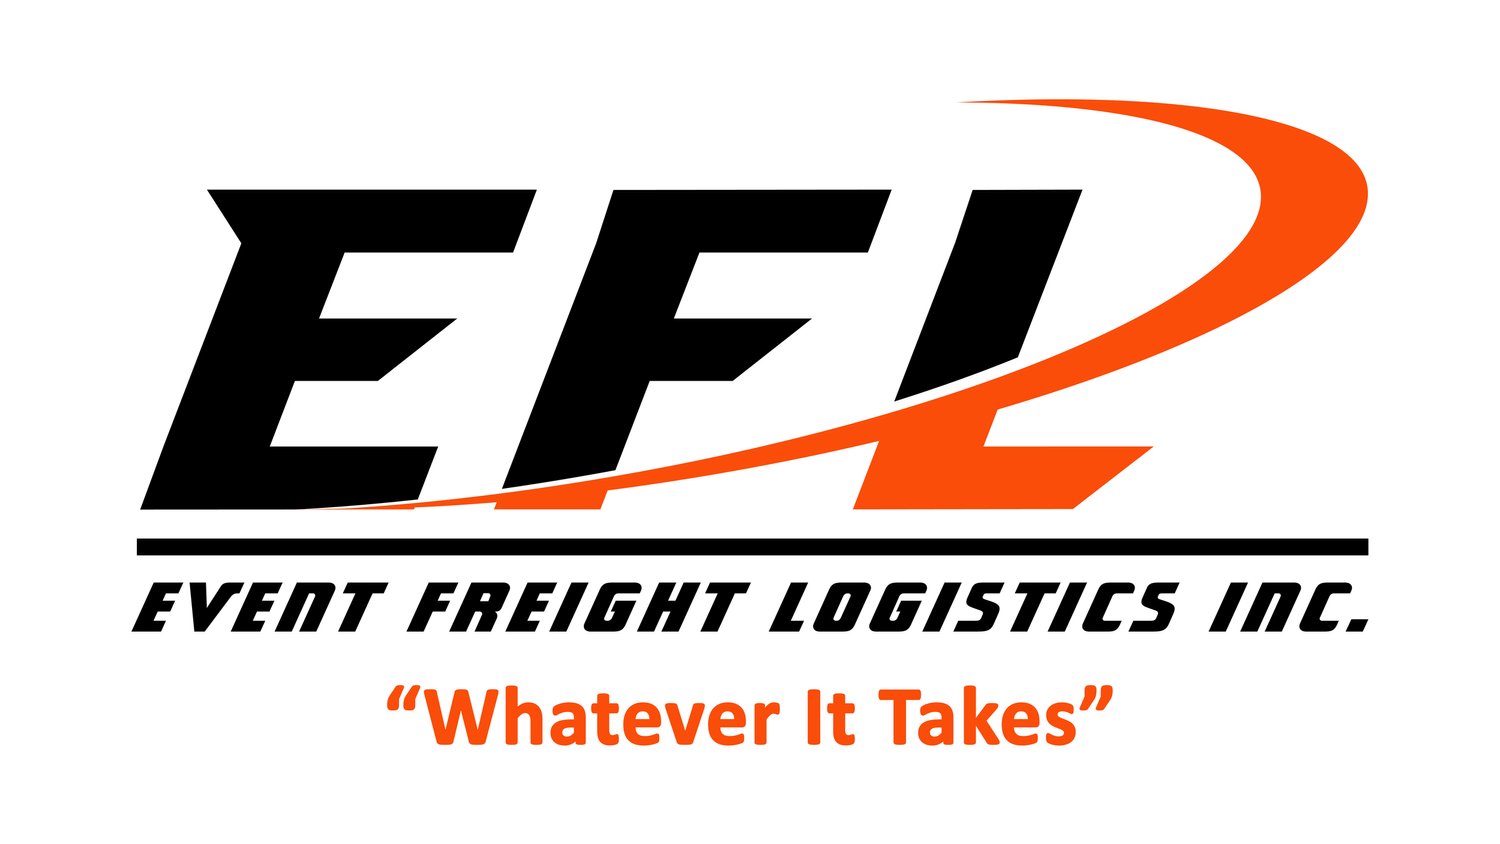 Event Freight Logistics Inc.